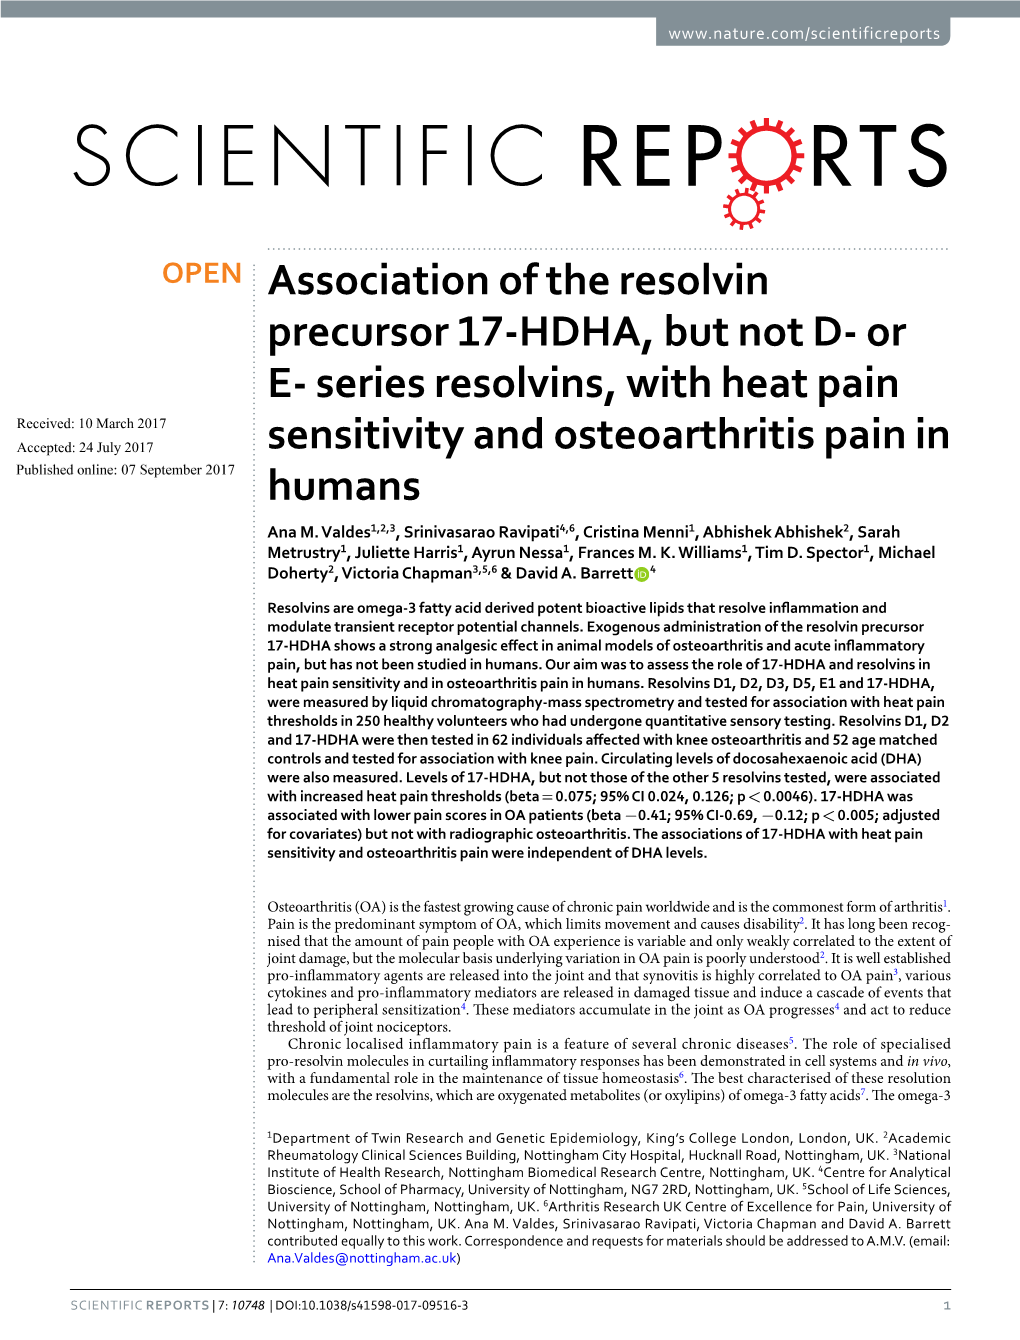 Association of the Resolvin Precursor 17-HDHA, but Not D- Or E